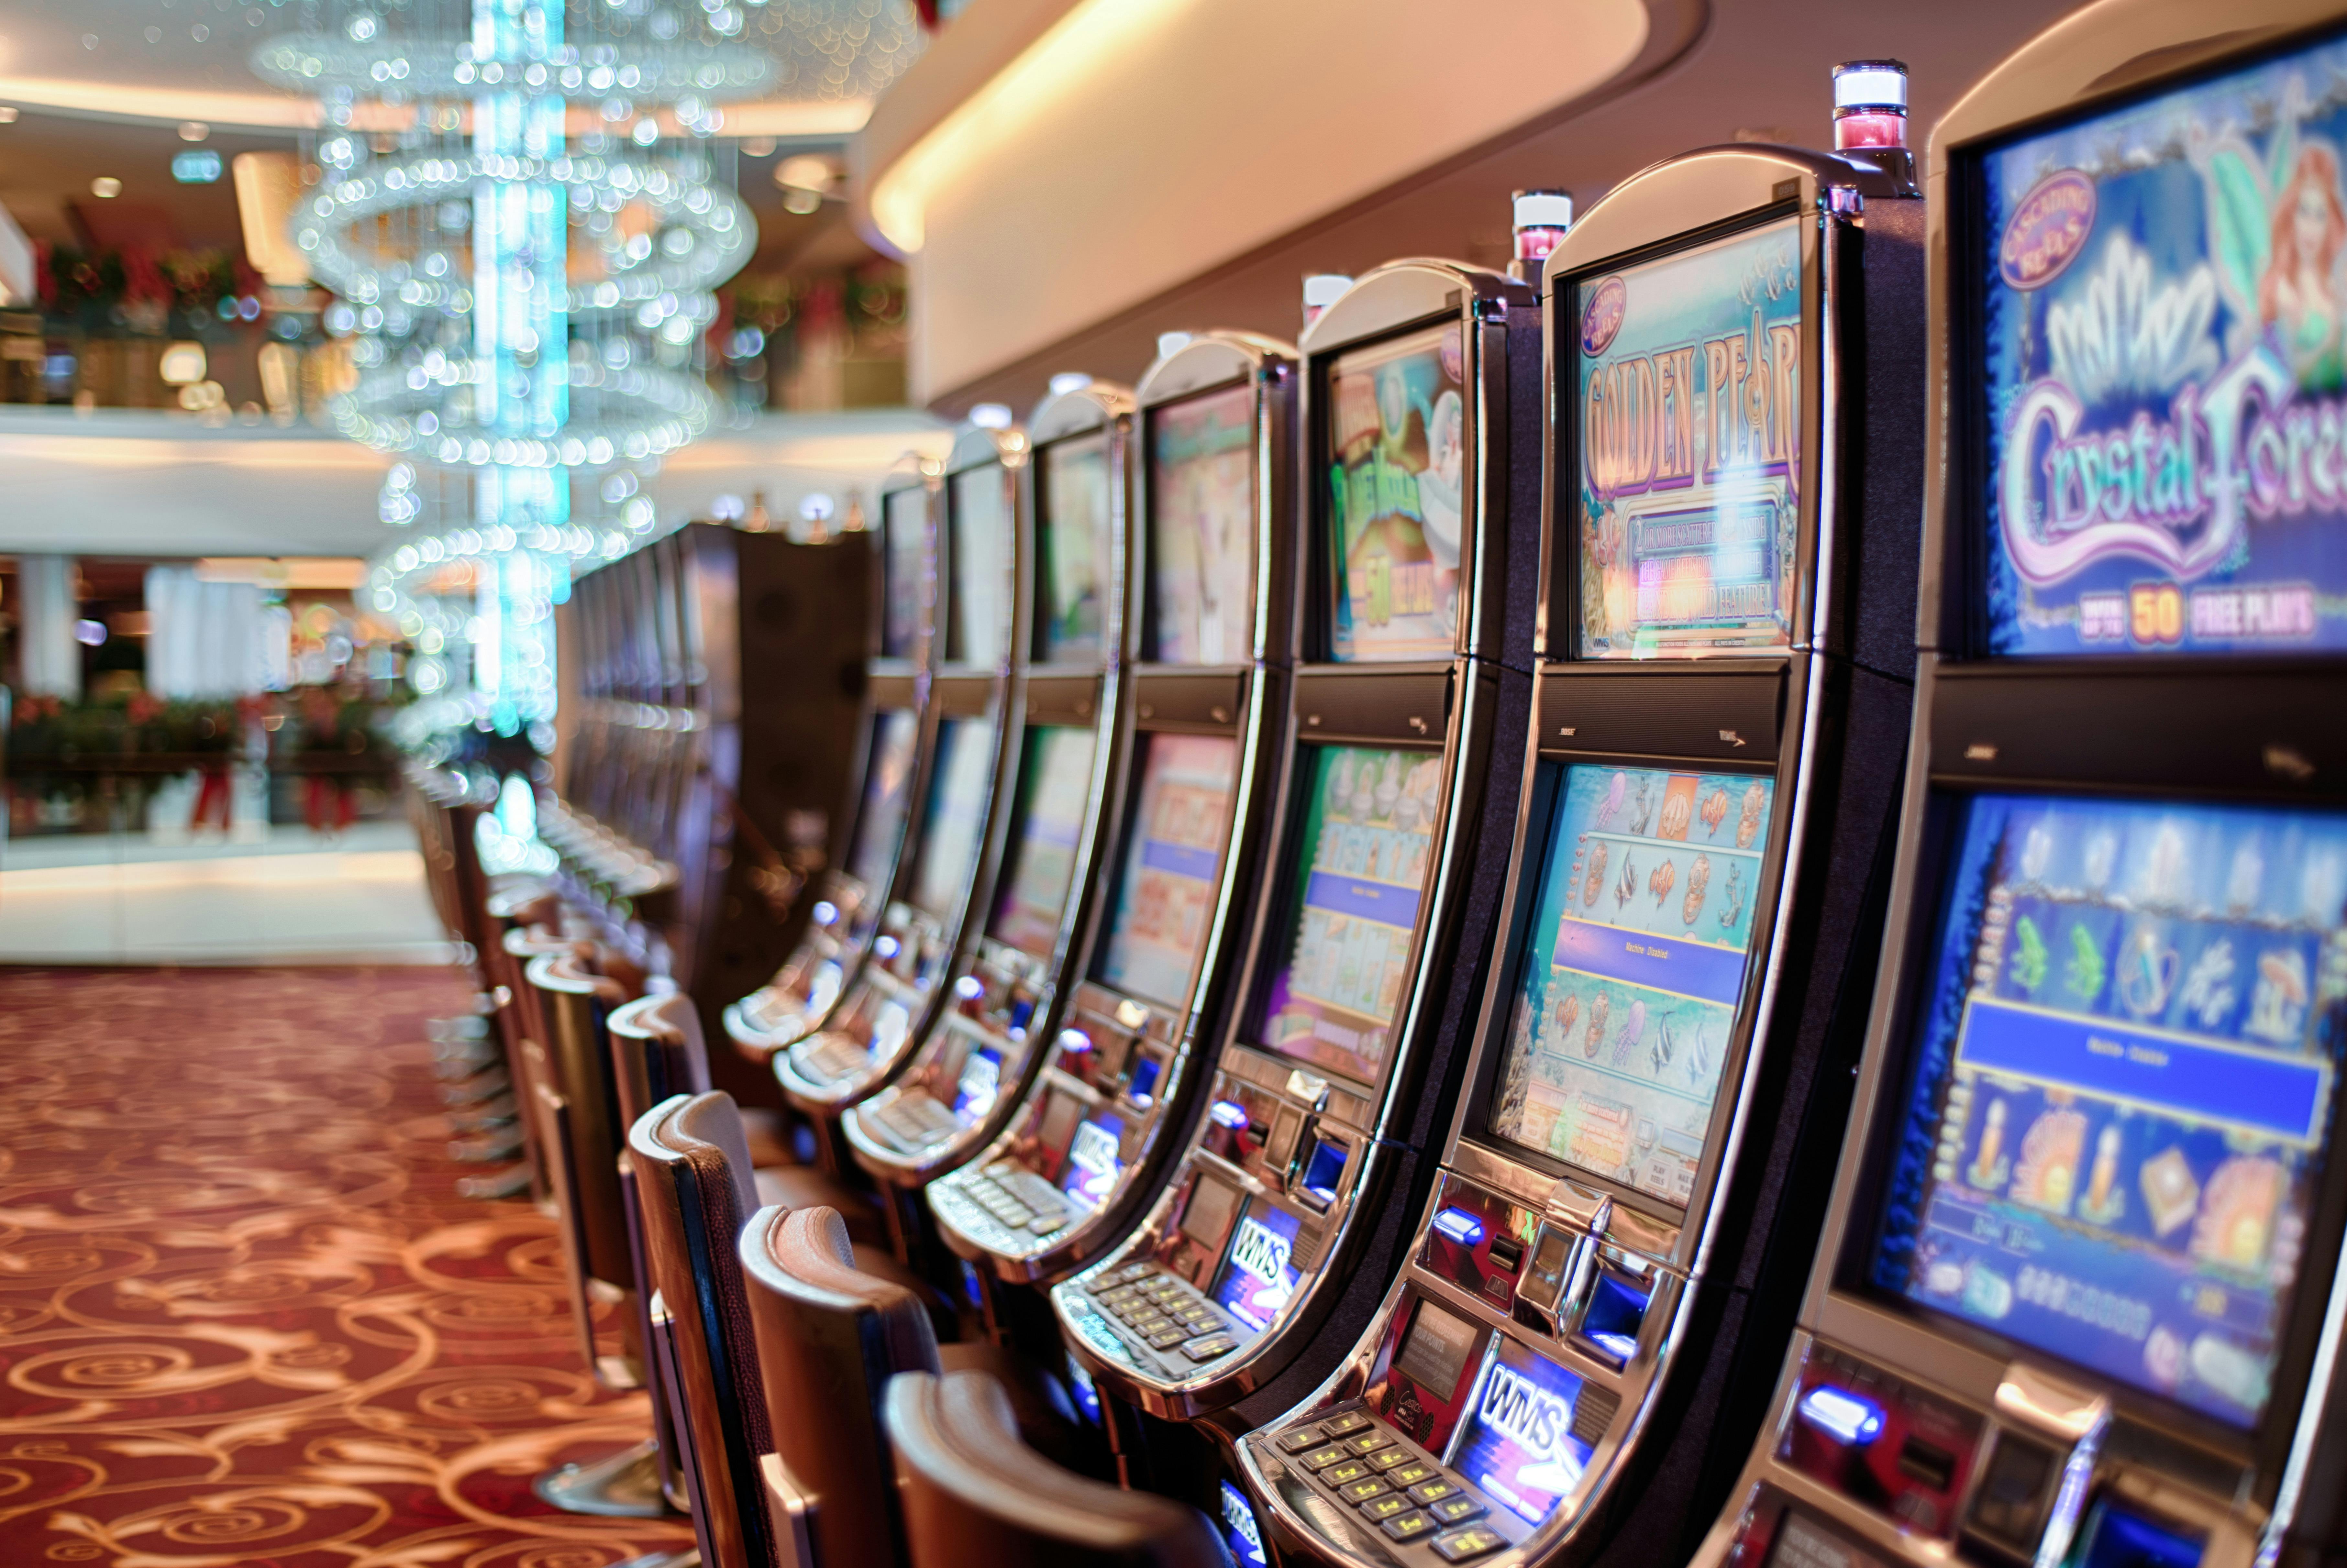 Beautiful gaming interface at Cyber casino